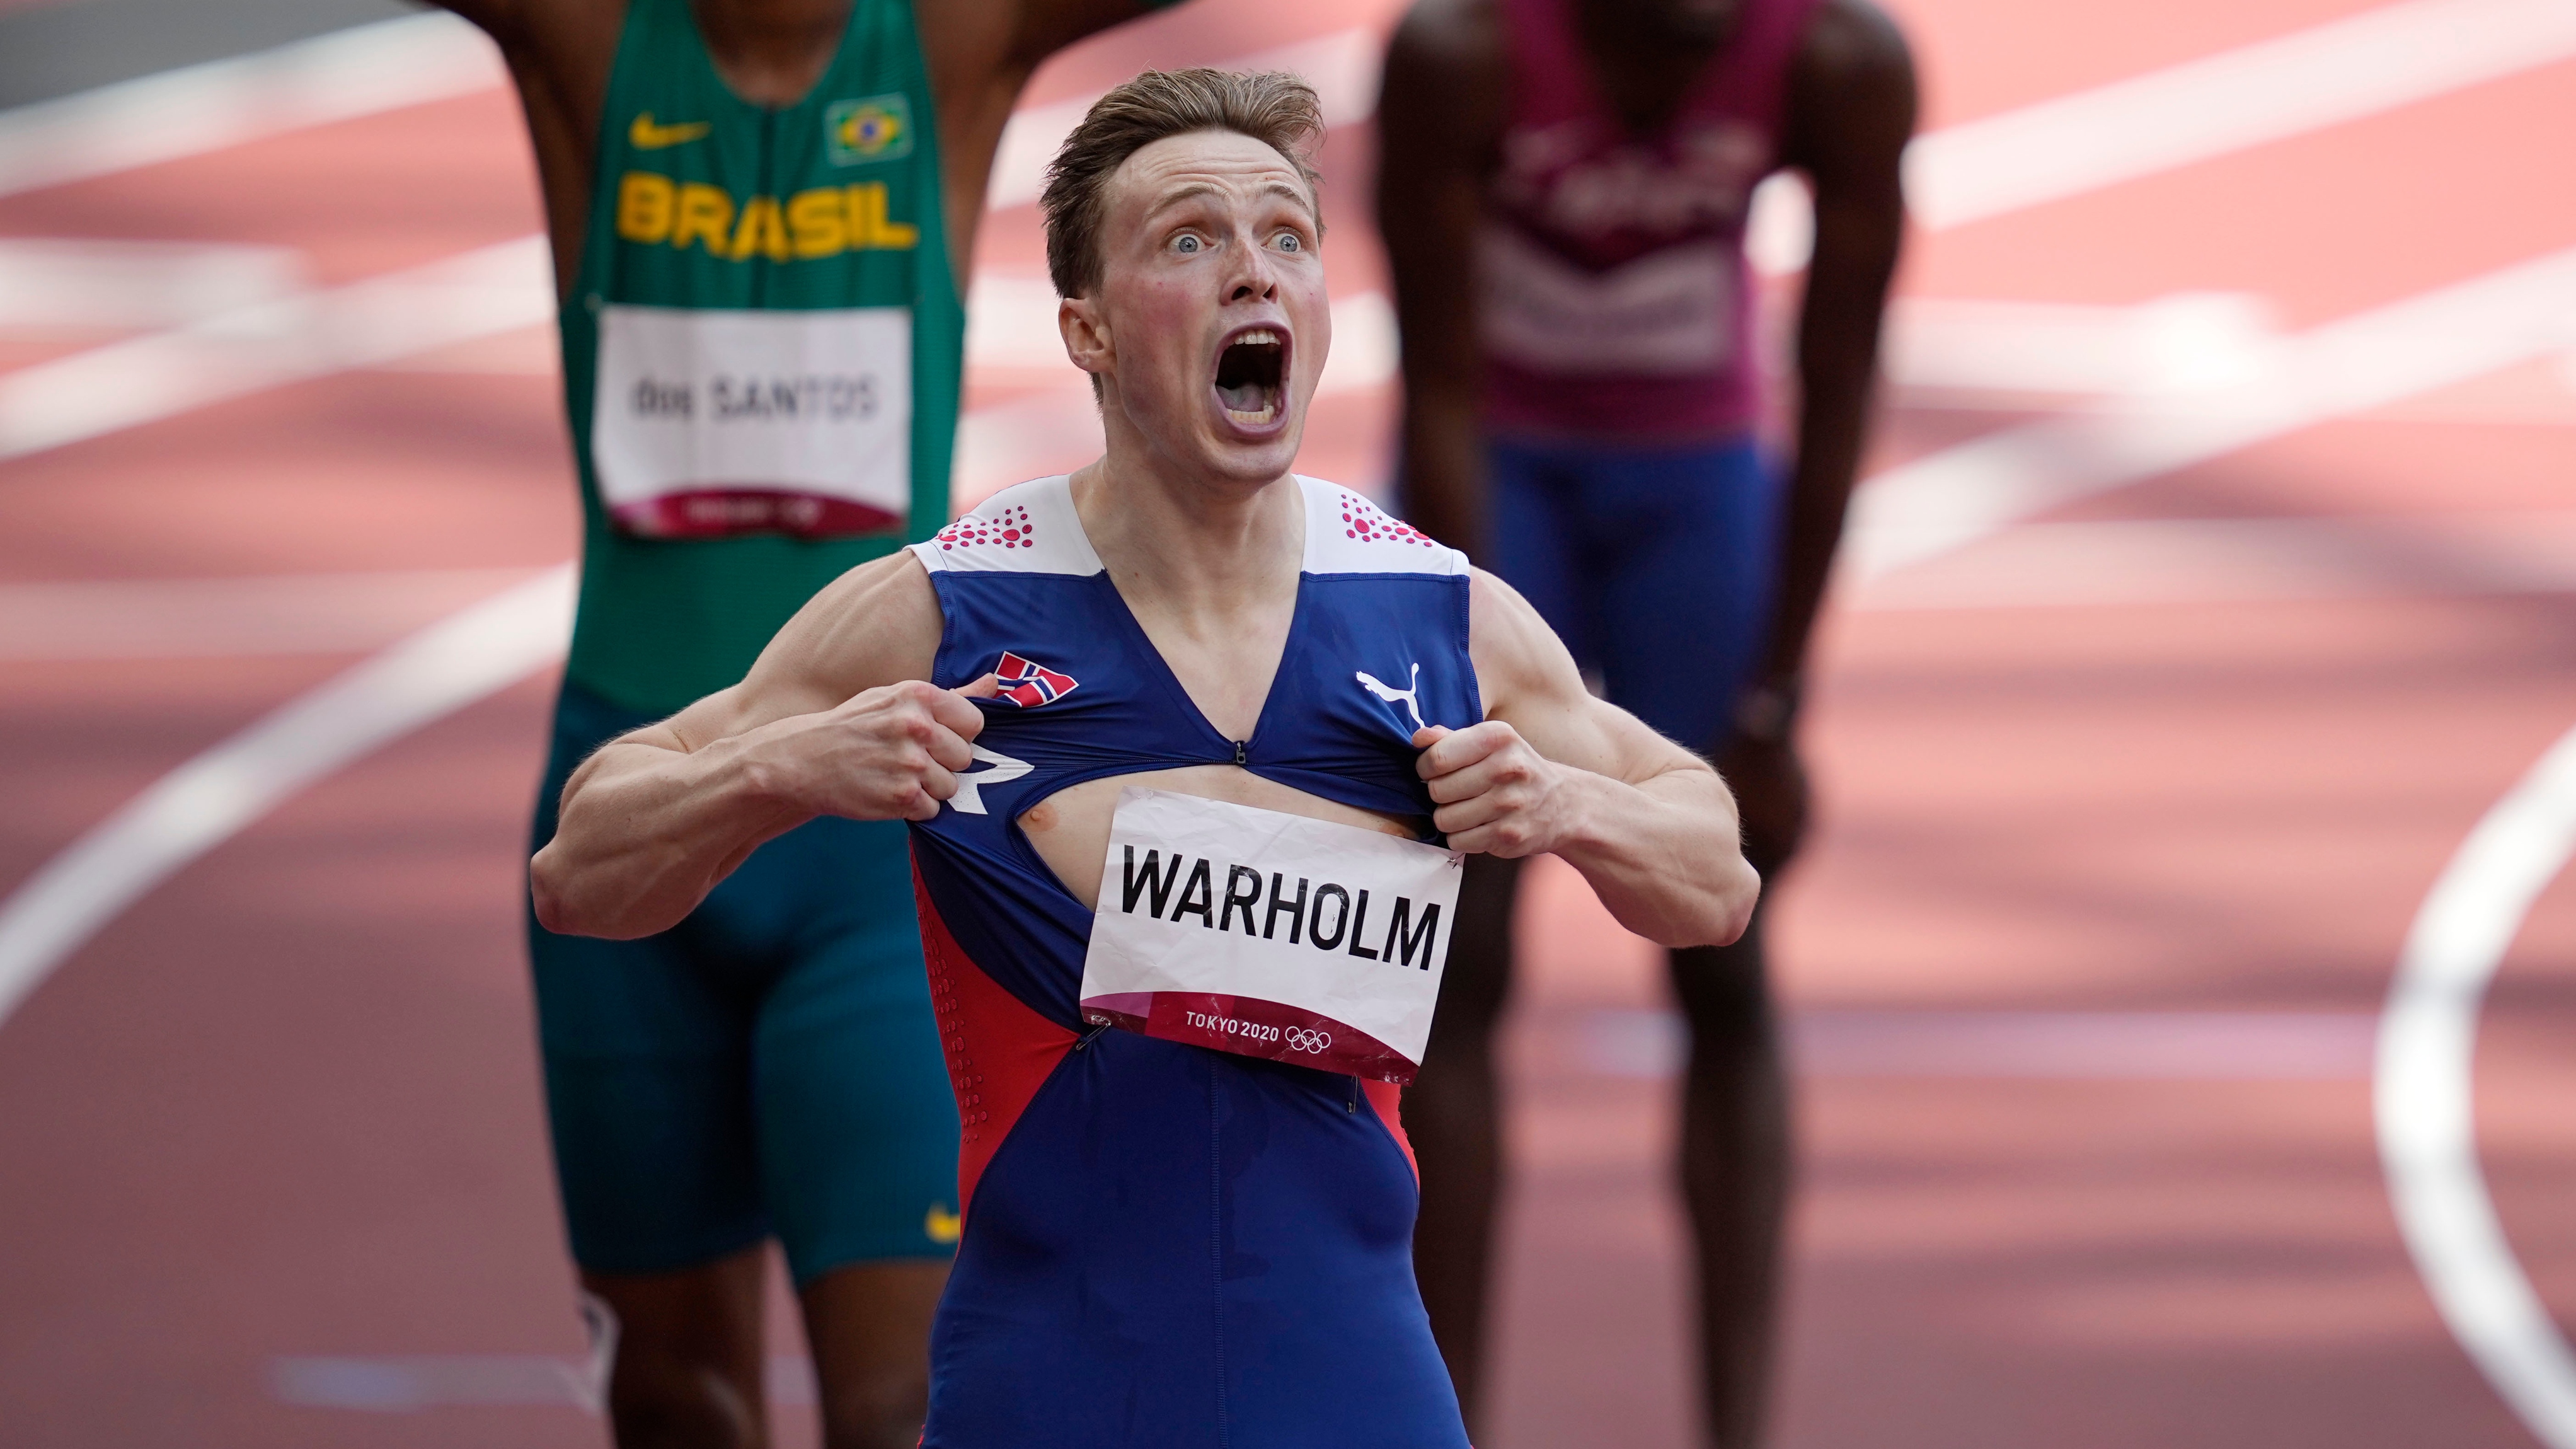 Karsten Warholm destroys 400 meter hurdles world record in Olympic final -  Sports Illustrated